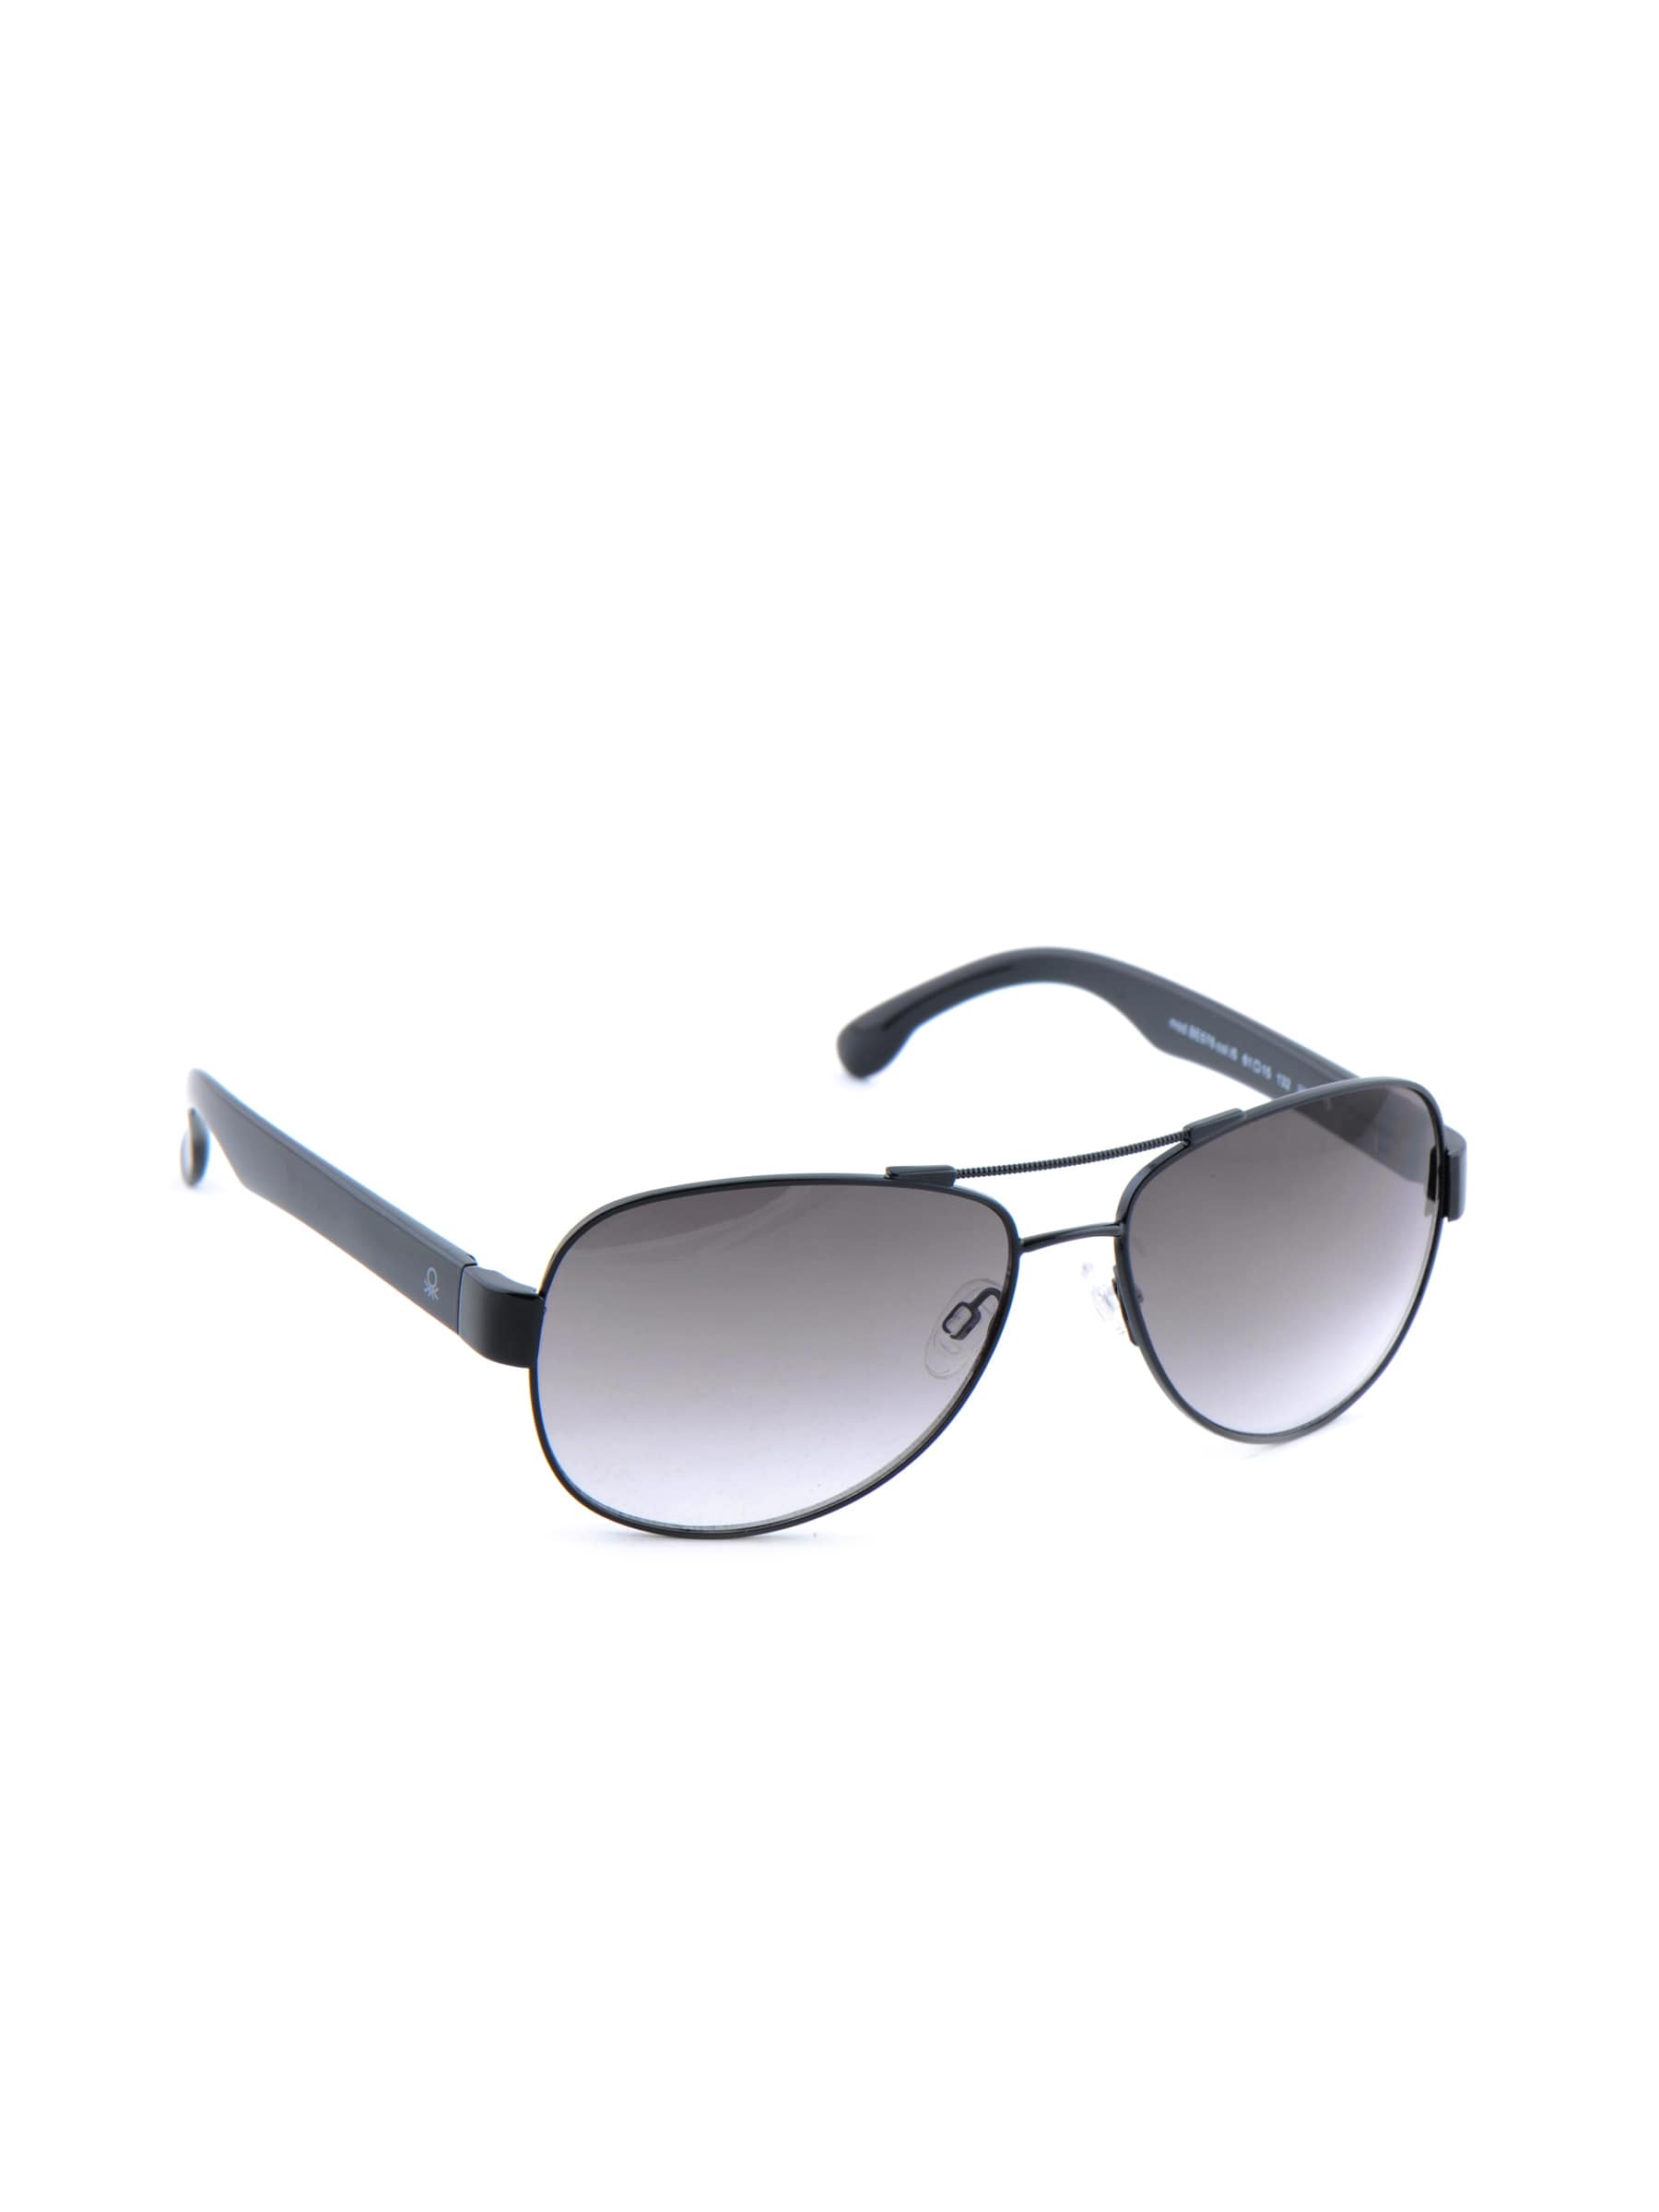 United Colors of Benetton Men Funky Eyewear Black Sunglasses